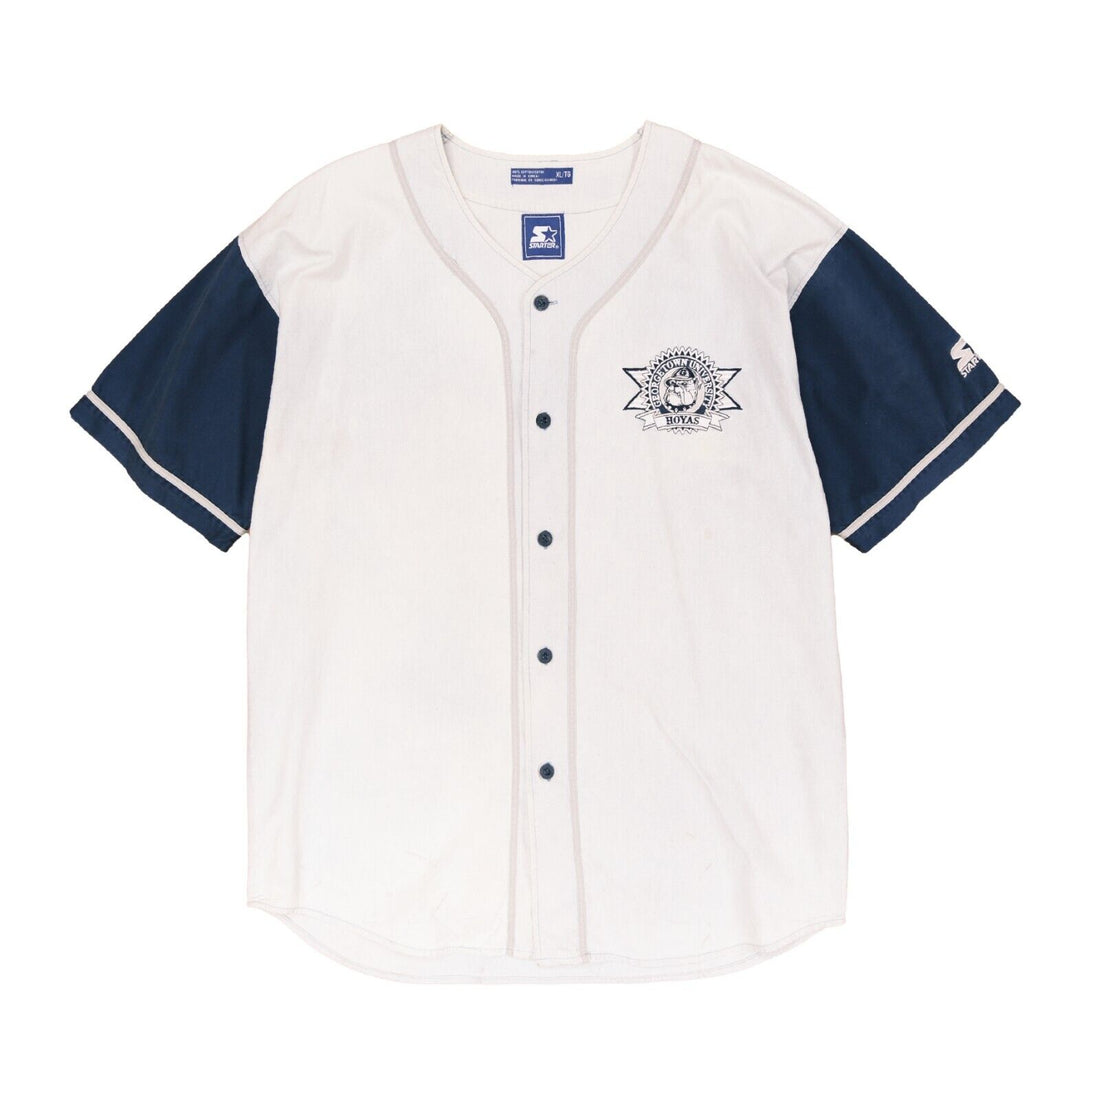 Vintage MLB Starter St Louis Cardinals Starter Pinstripe Baseball Jersey  Size XL